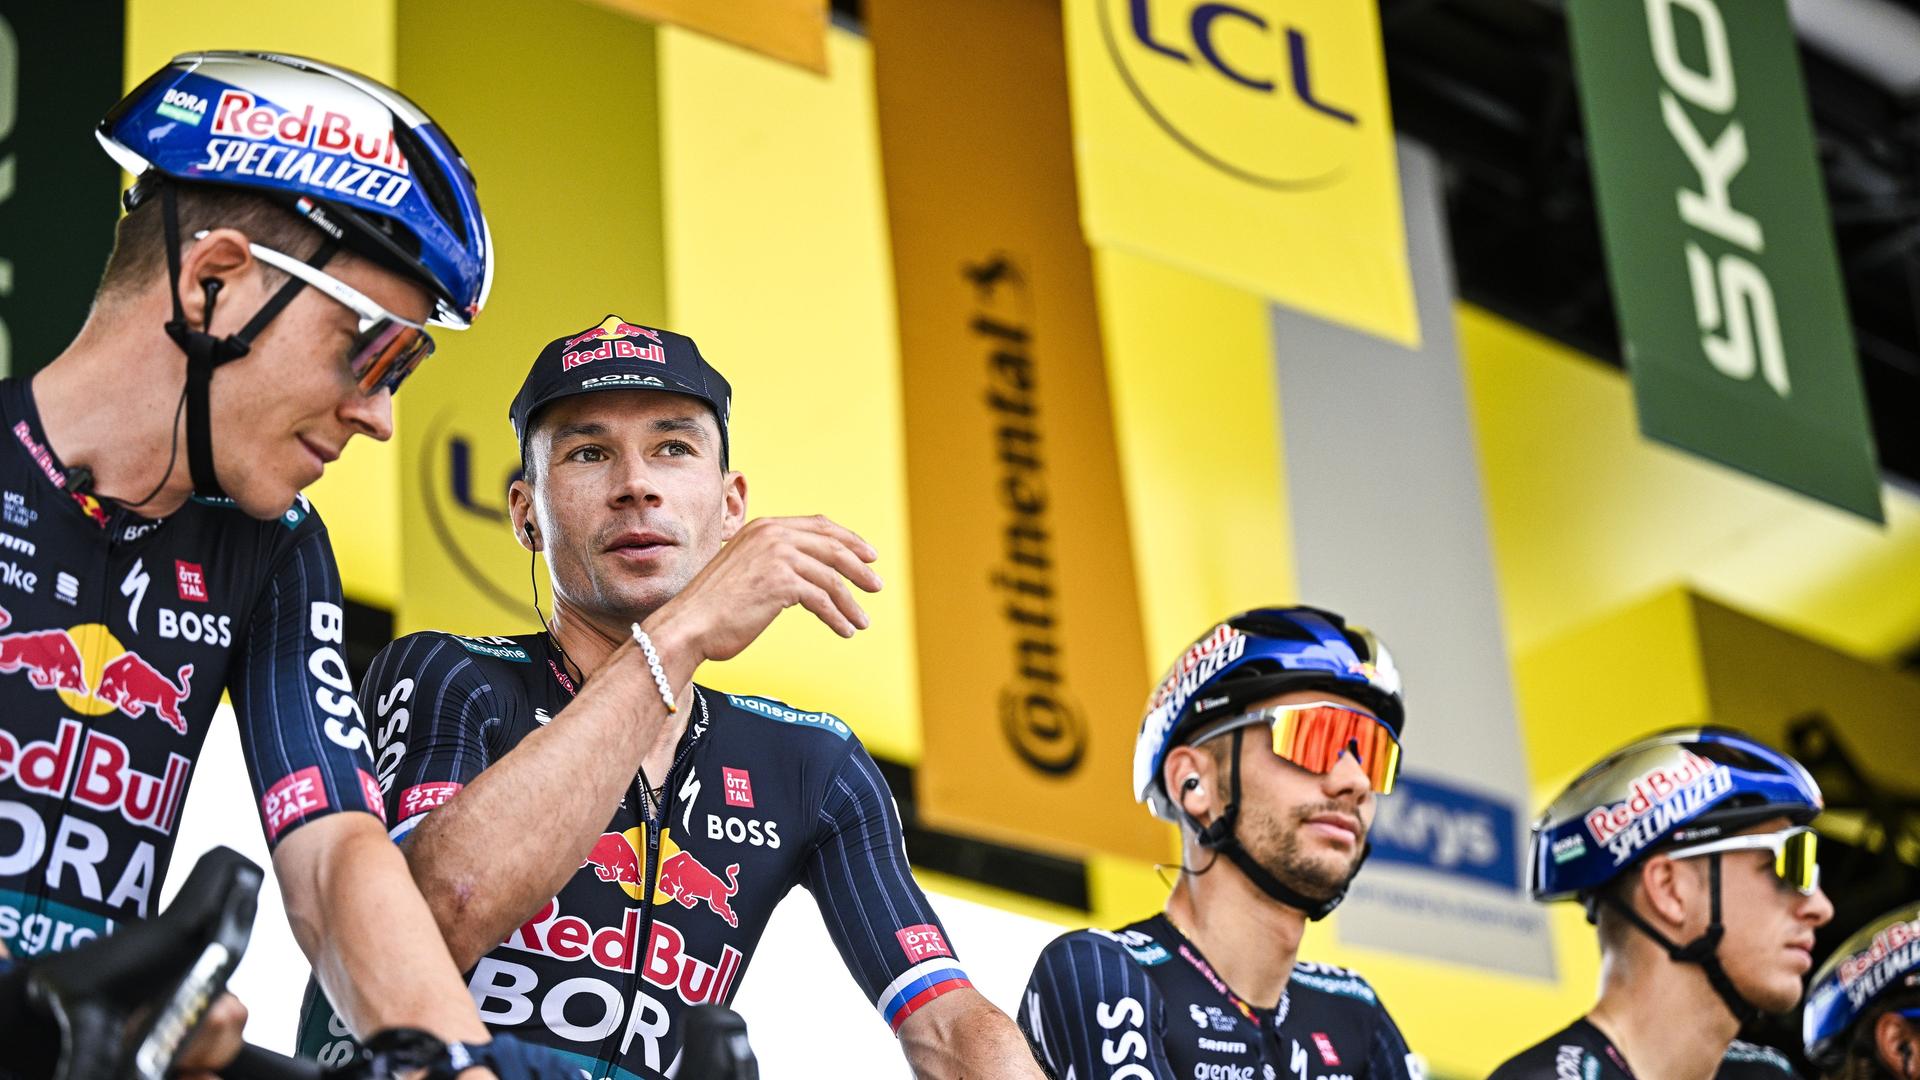 Fahrer des Teams Red Bull-Bora-hansgrohe am Start einer Etappe bei der Tour de France 